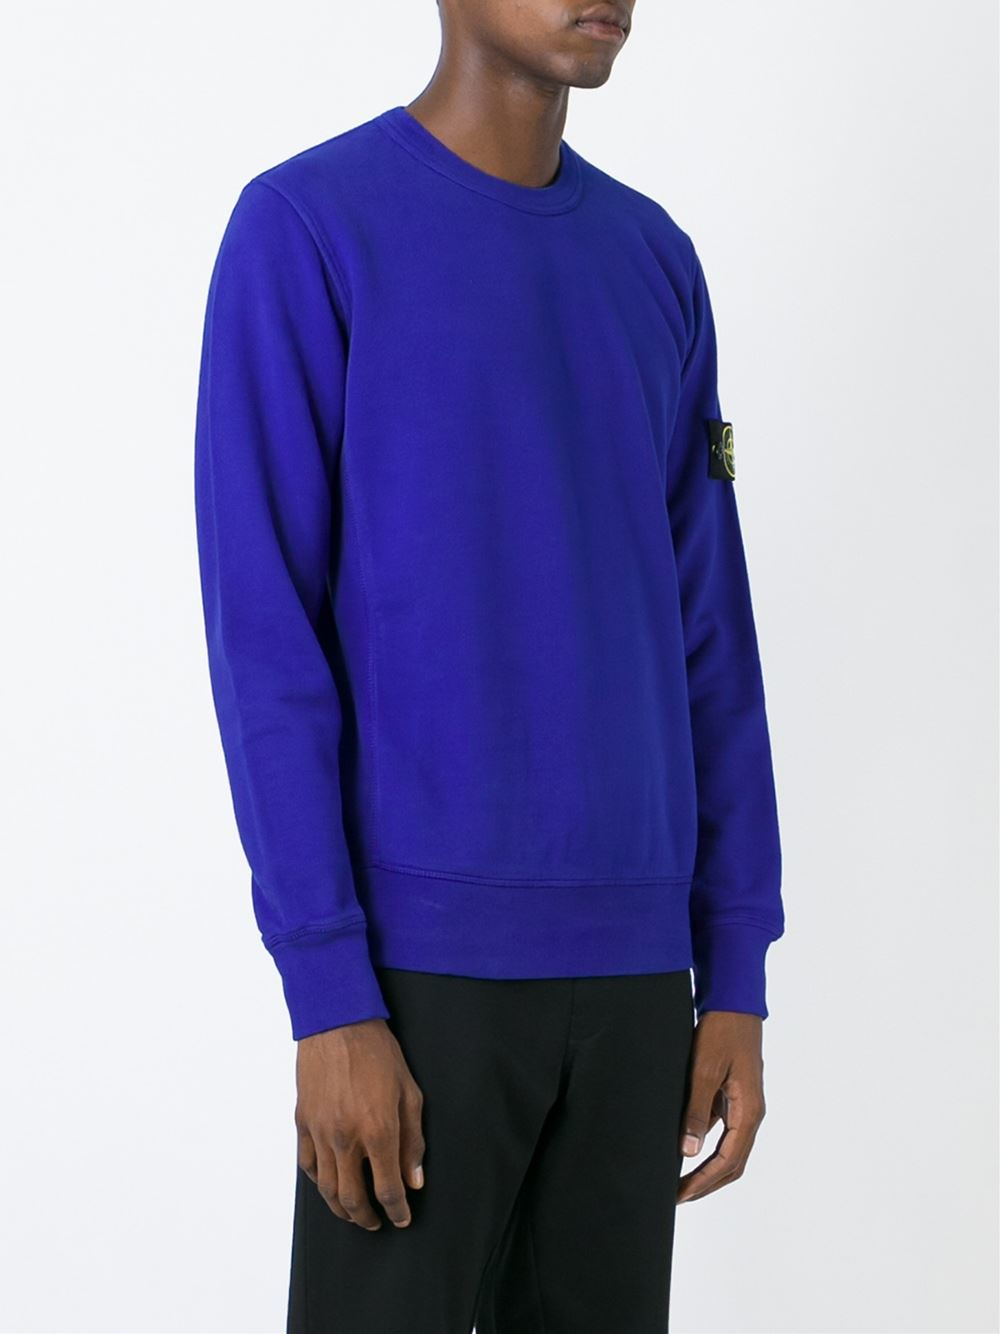 Lyst - Stone Island Crew Neck Sweatshirt in Blue for Men